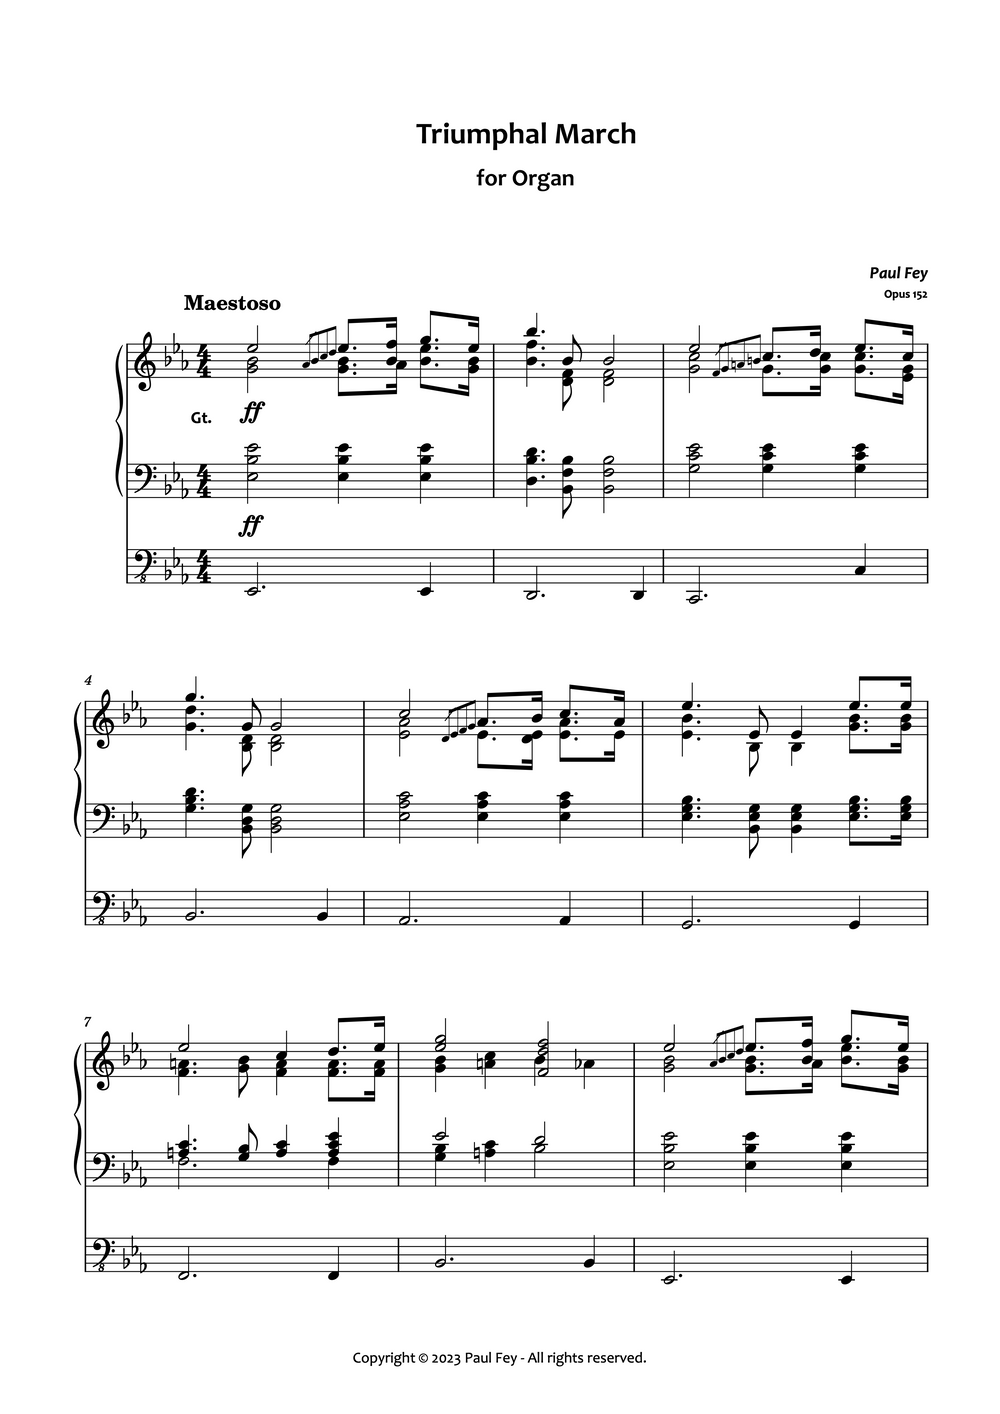 Triumphant March for Organ By Paul Fey Sheet Music 